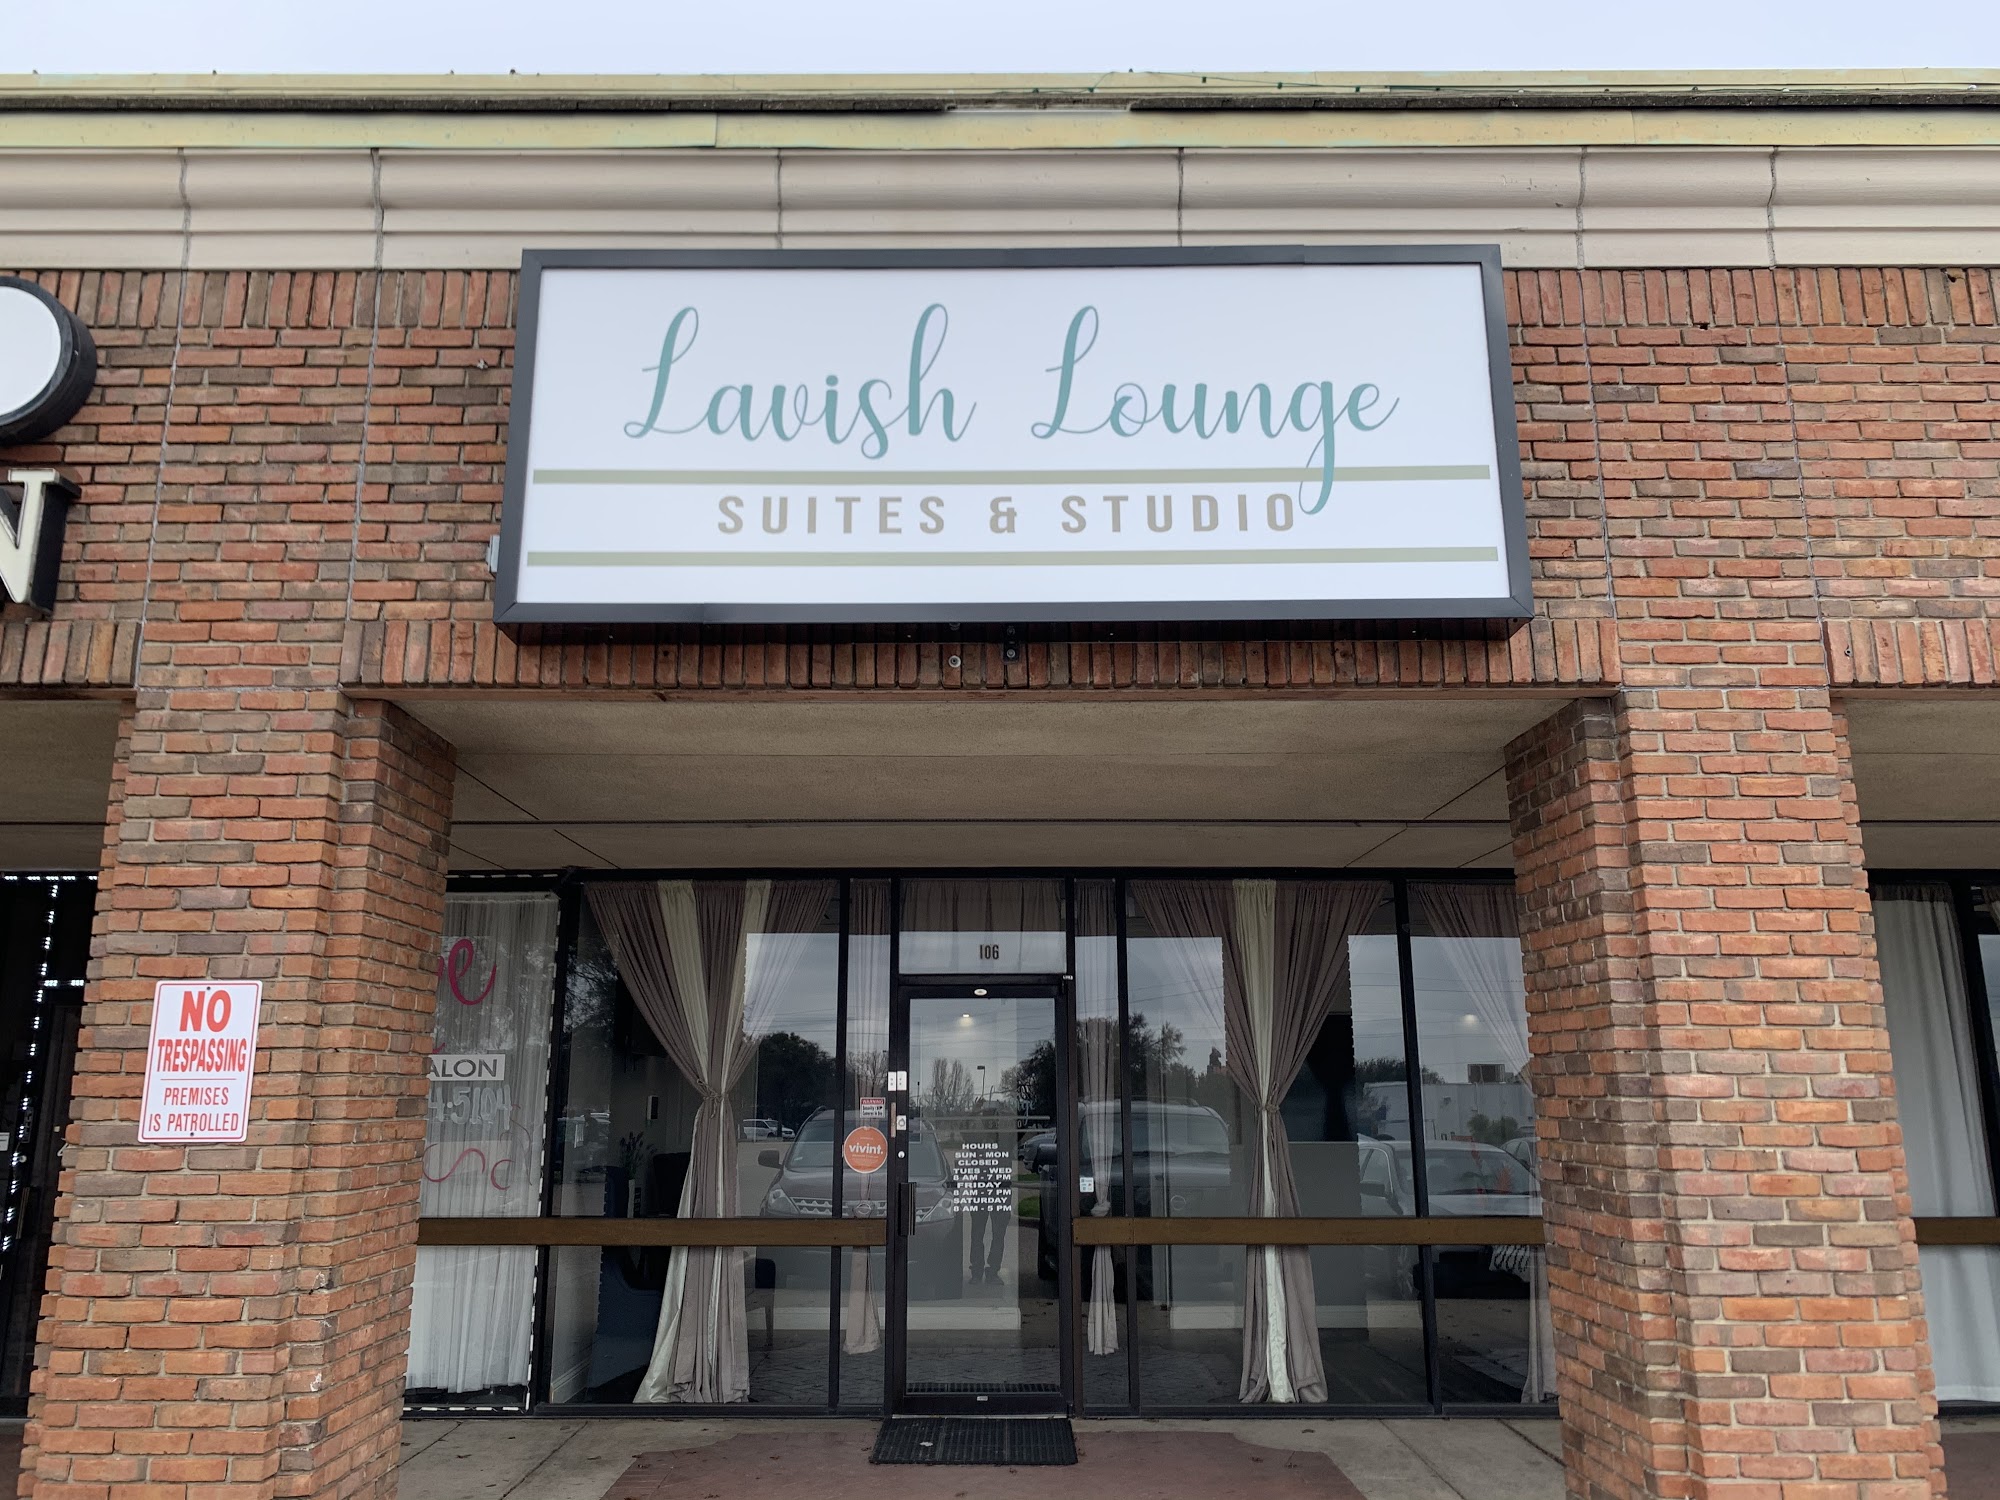 The Lavish Lounge Suites & Studio